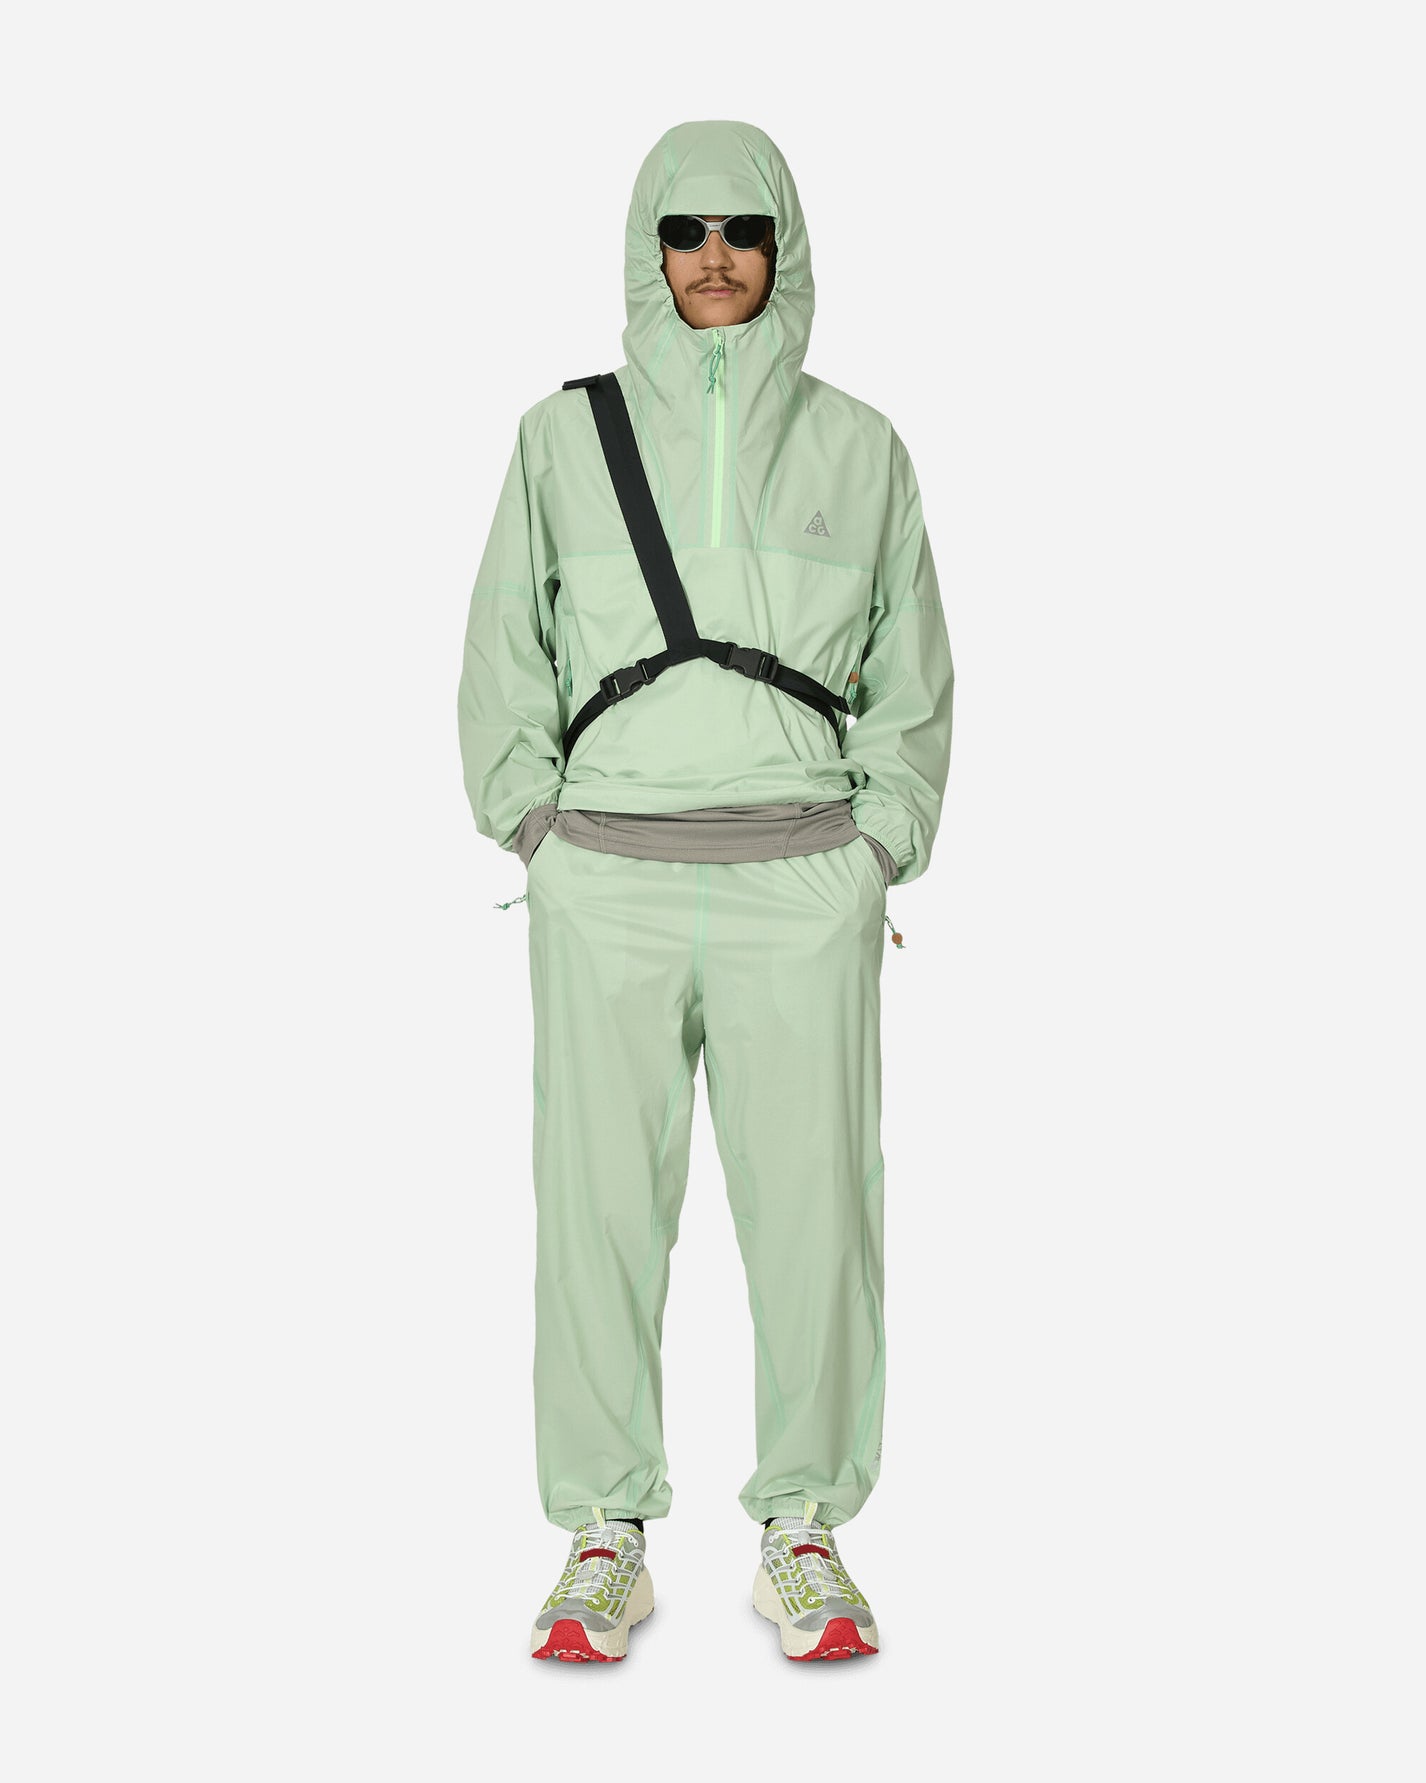 Nike M Acg Sfadv Trail Snack Pant Vapor Green/Reflective Silv Pants Sweatpants FQ3064-376